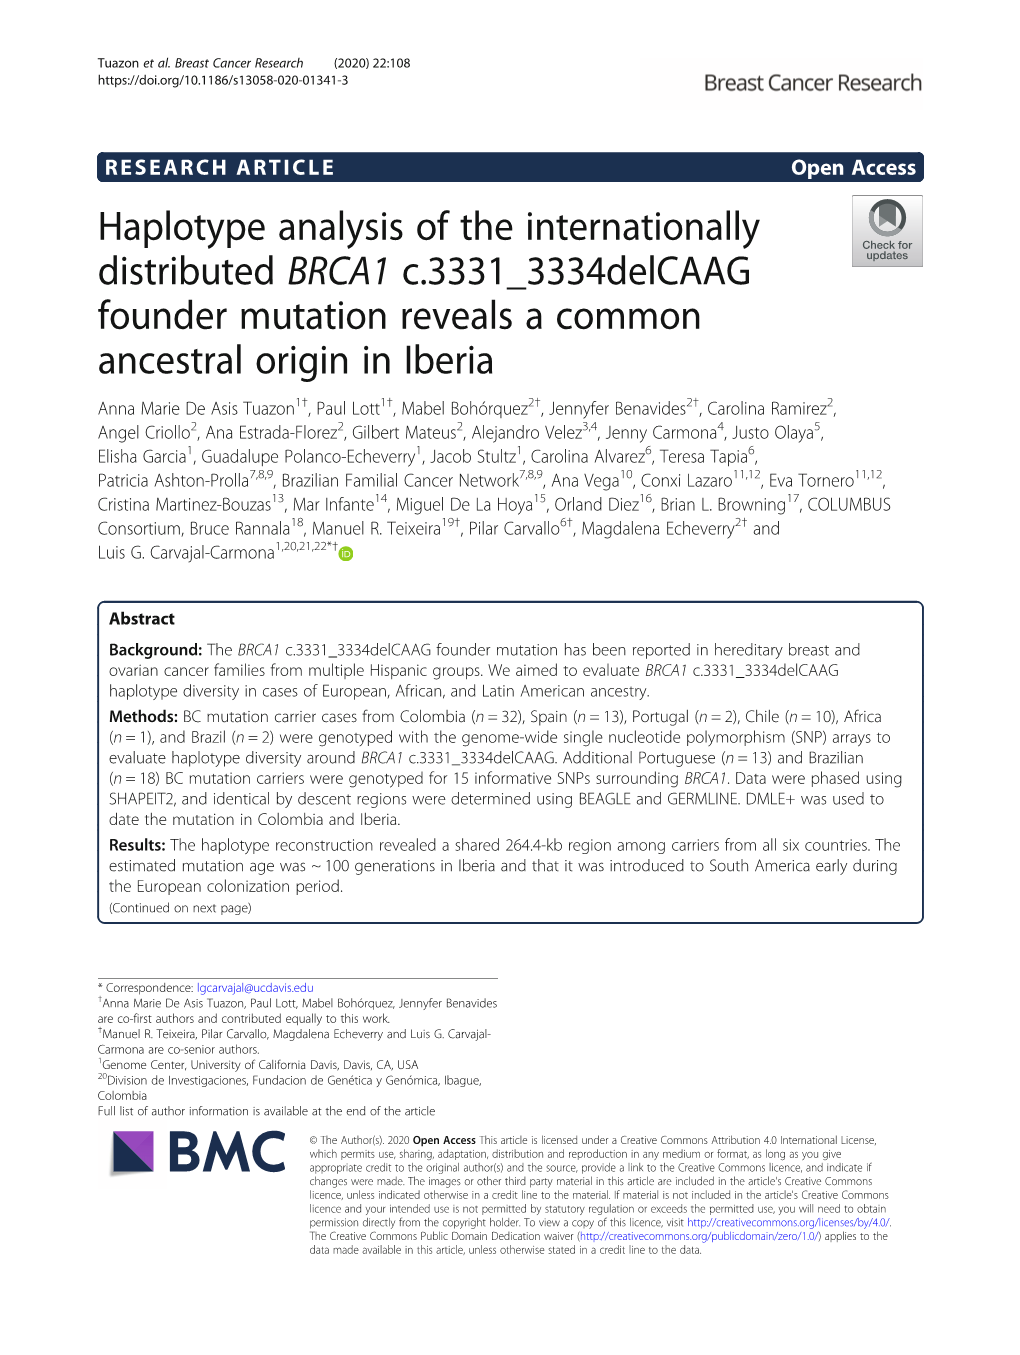 Haplotype Analysis of the Internationally Distributed BRCA1 C